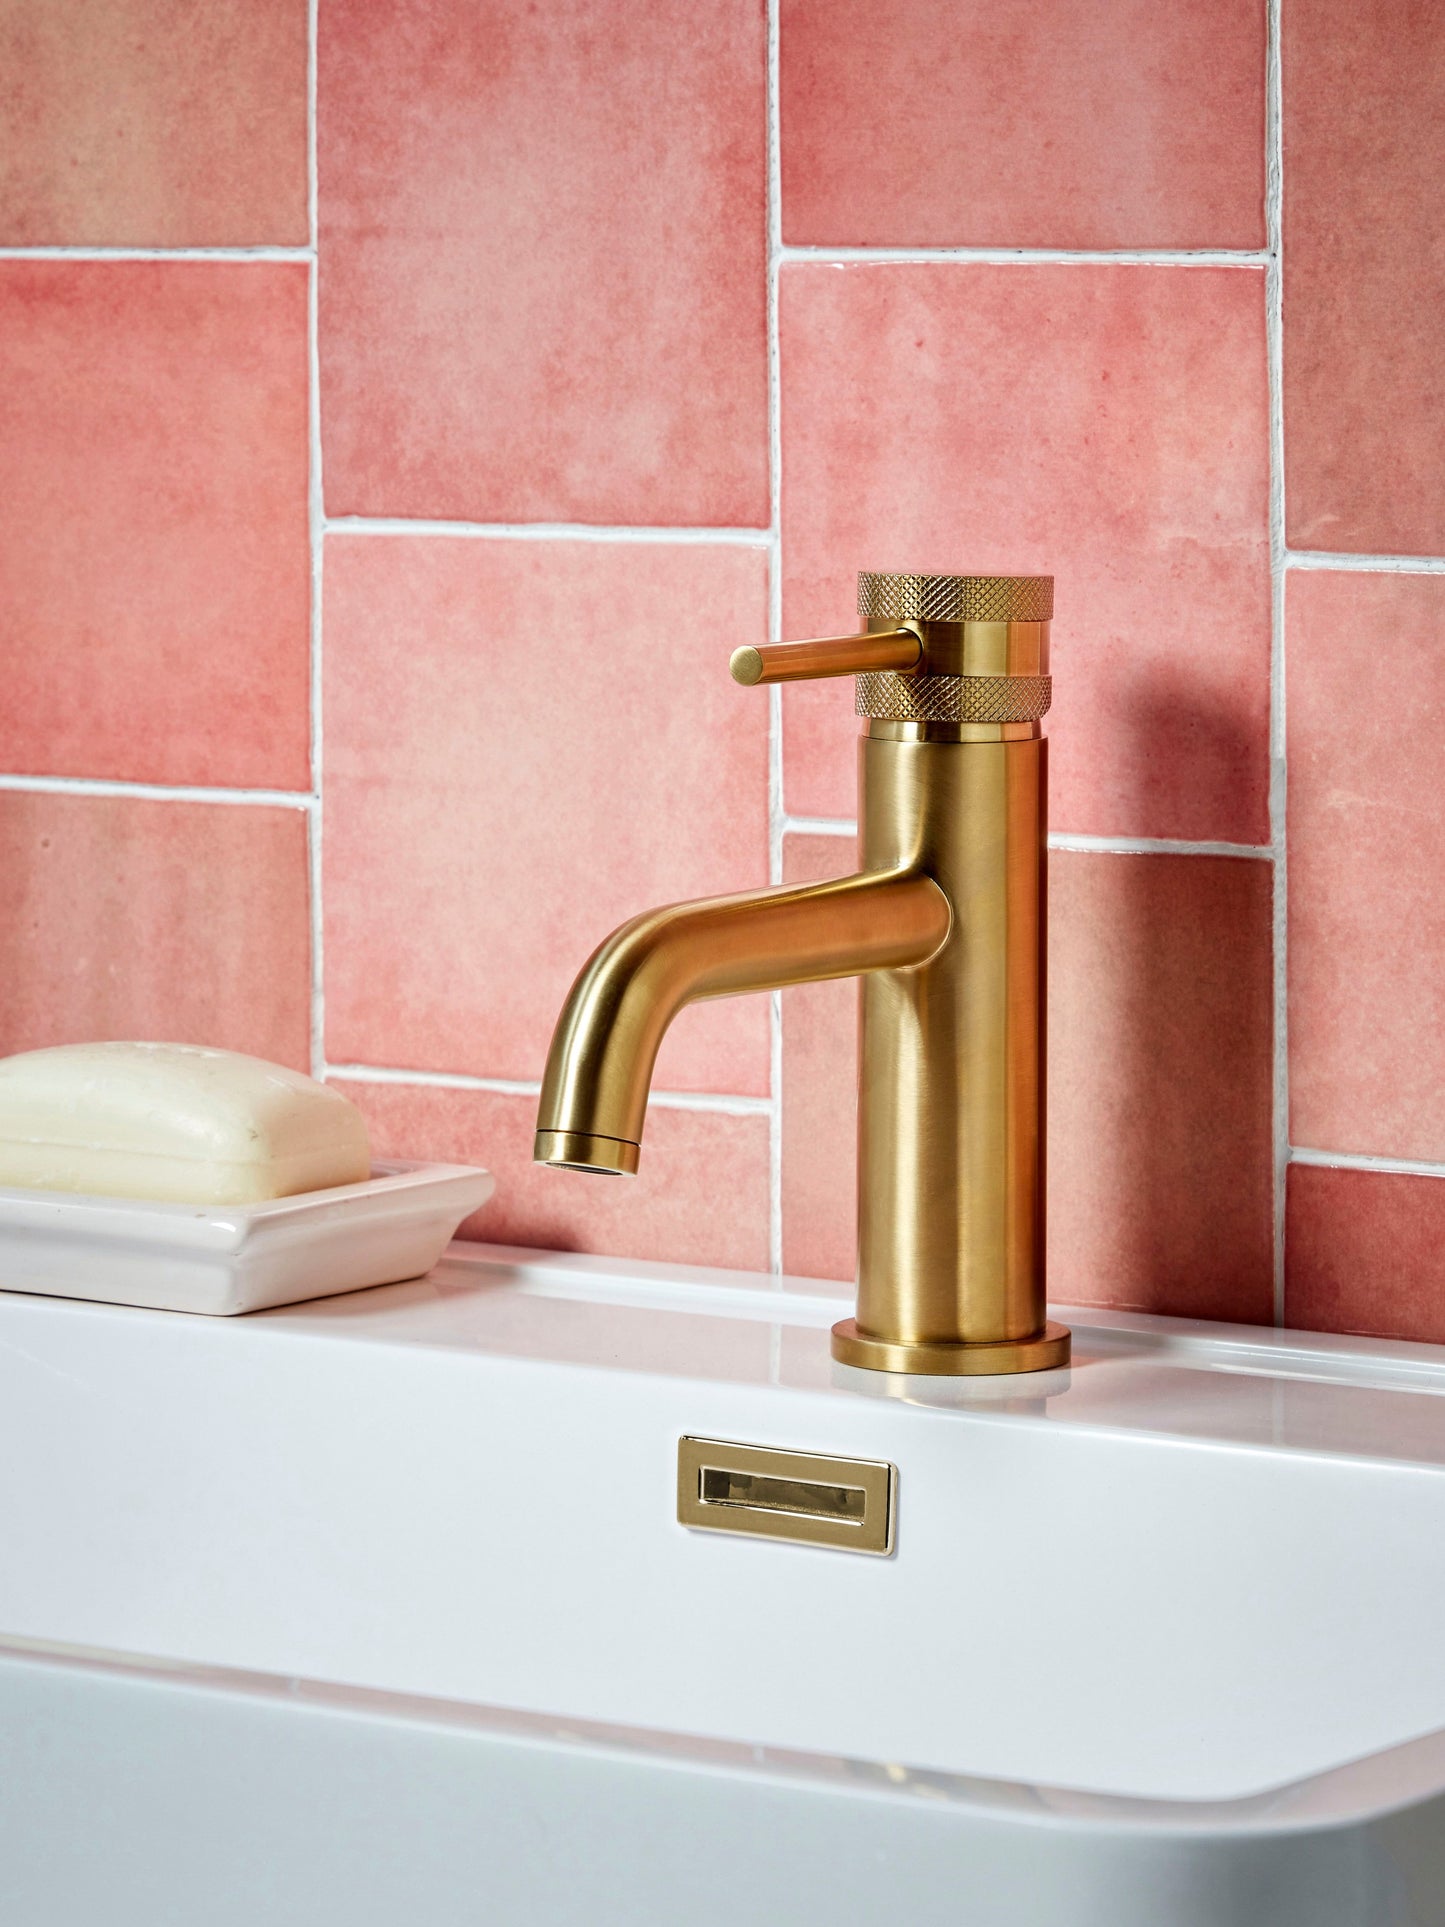 Vares-A Desire Mono Basin Bathroom Mixer Taps - Brushed Brass